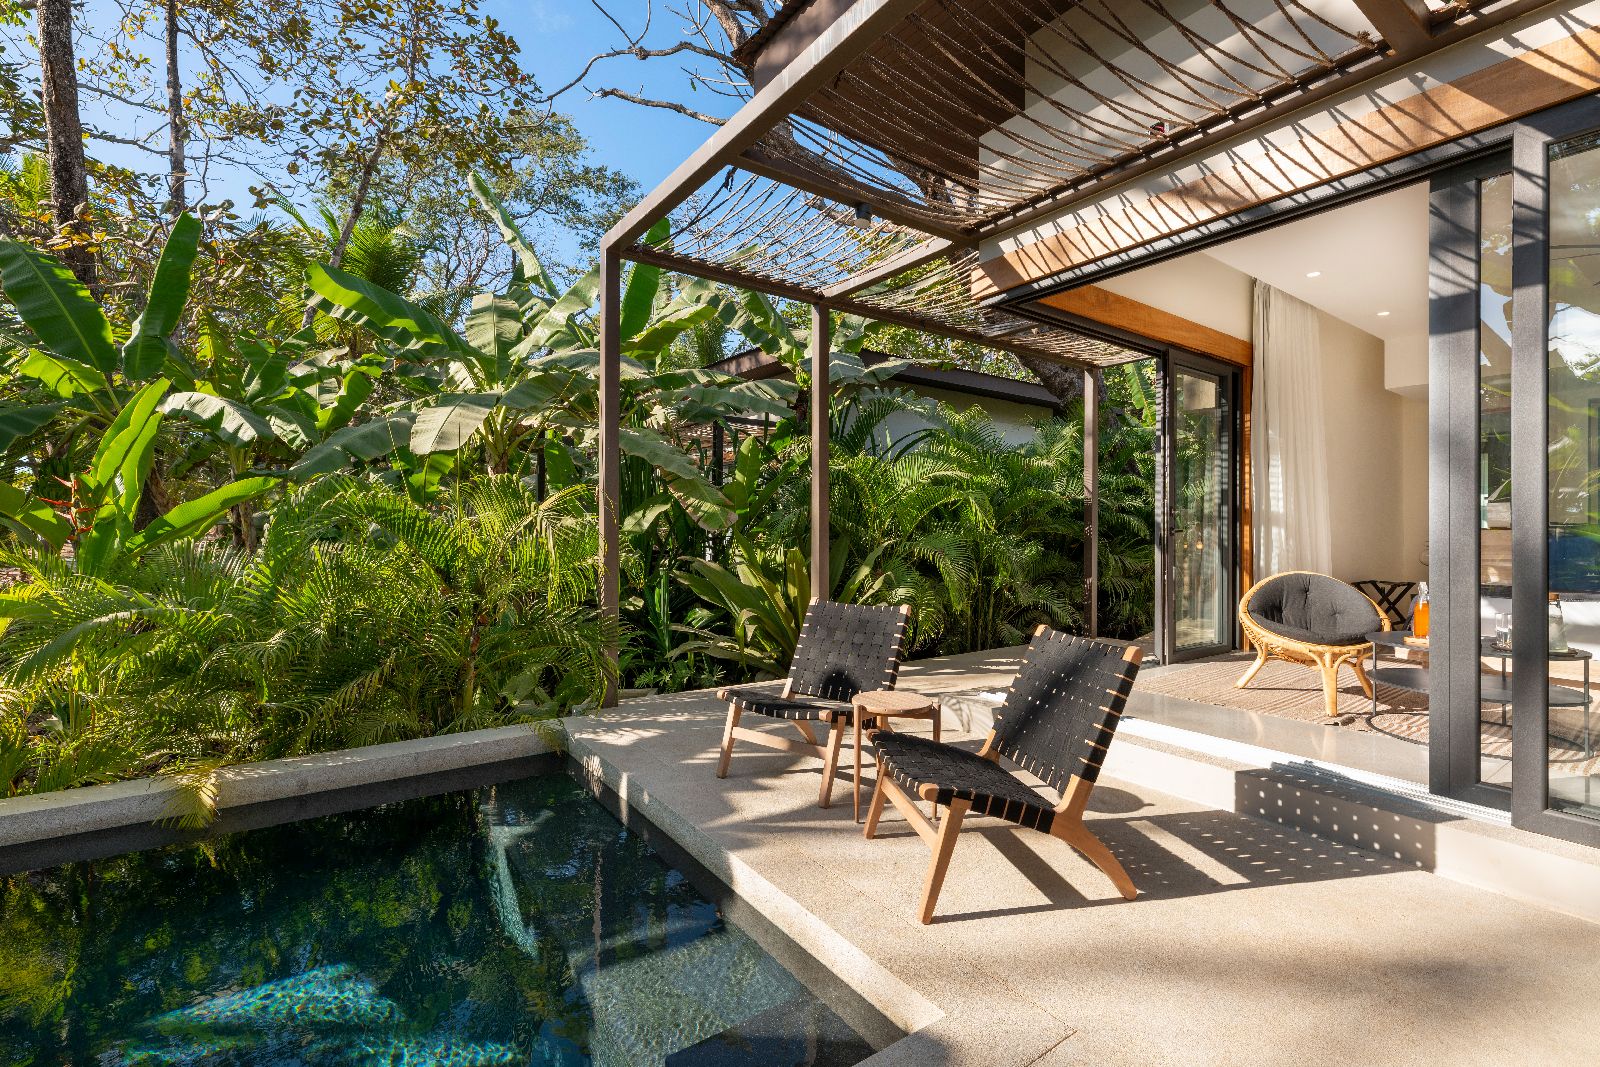 Plunge pool of a suite at Nantipa beach resort in Costa Rica